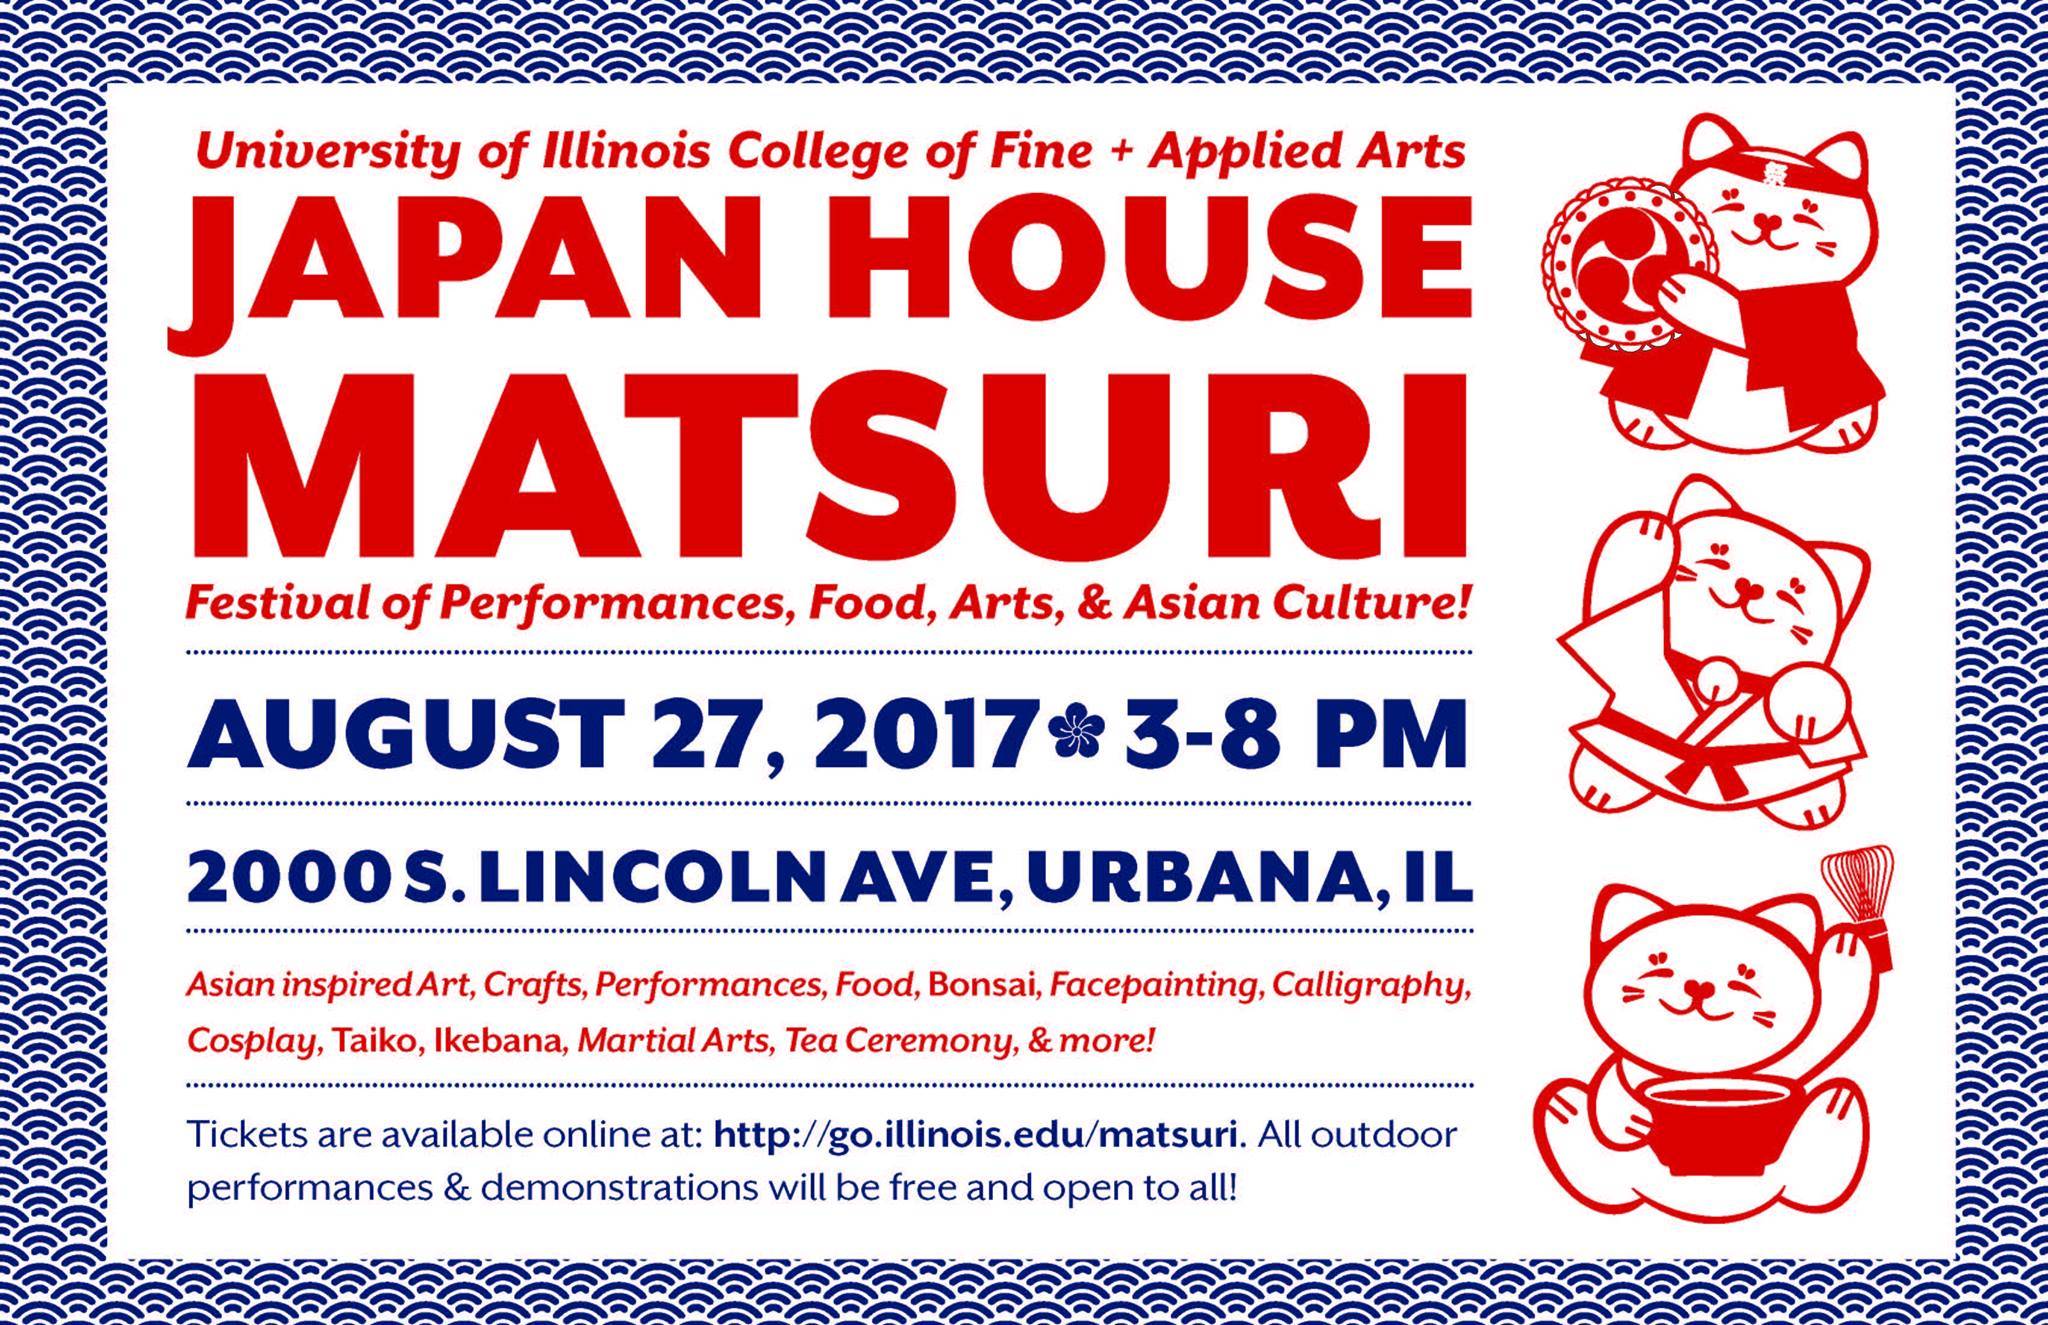 Japan House hosting annual Matsuri festival on August 27th